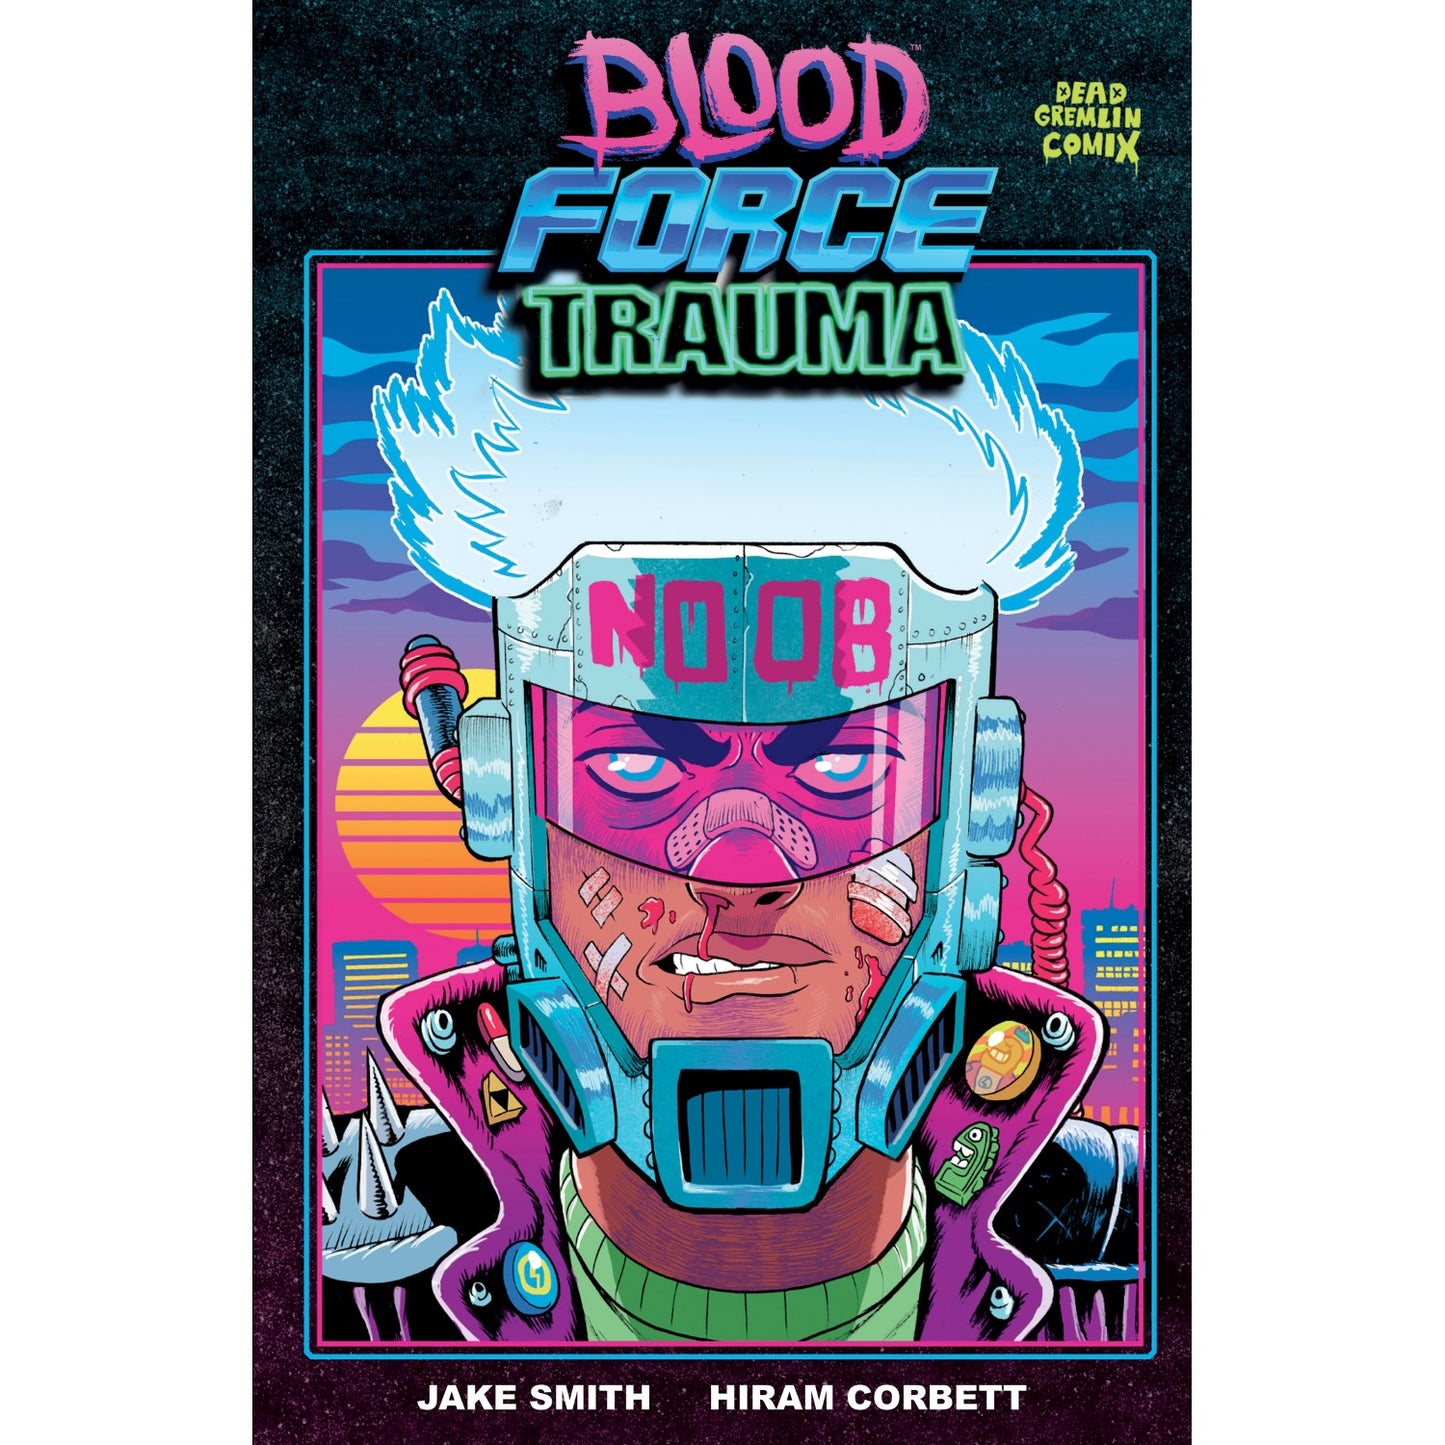 Blood Force Trauma (Paperback)